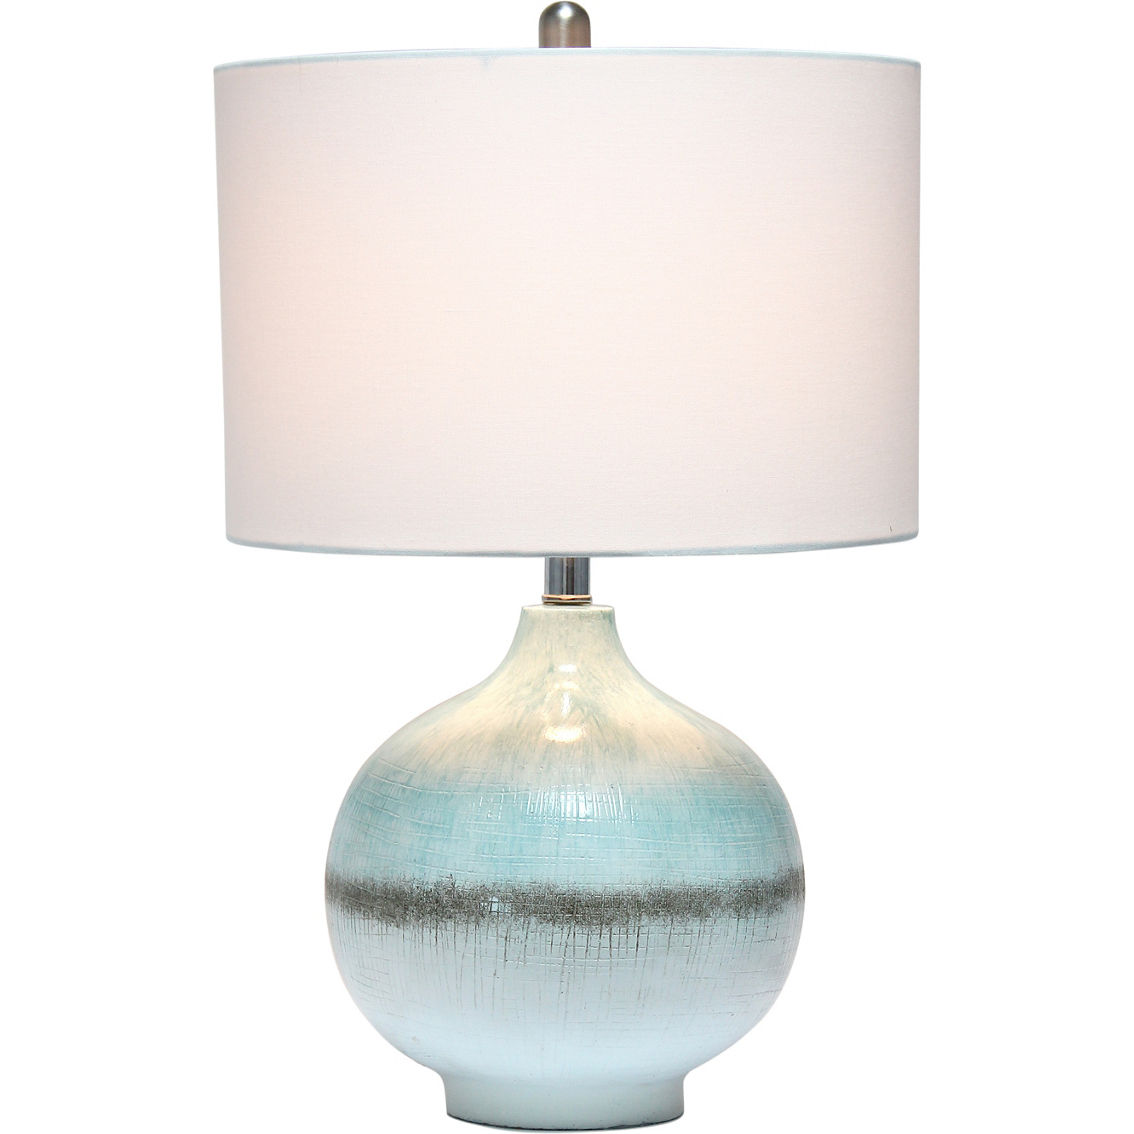 Lalia Home Bayside Horizon Table Lamp - Image 2 of 8